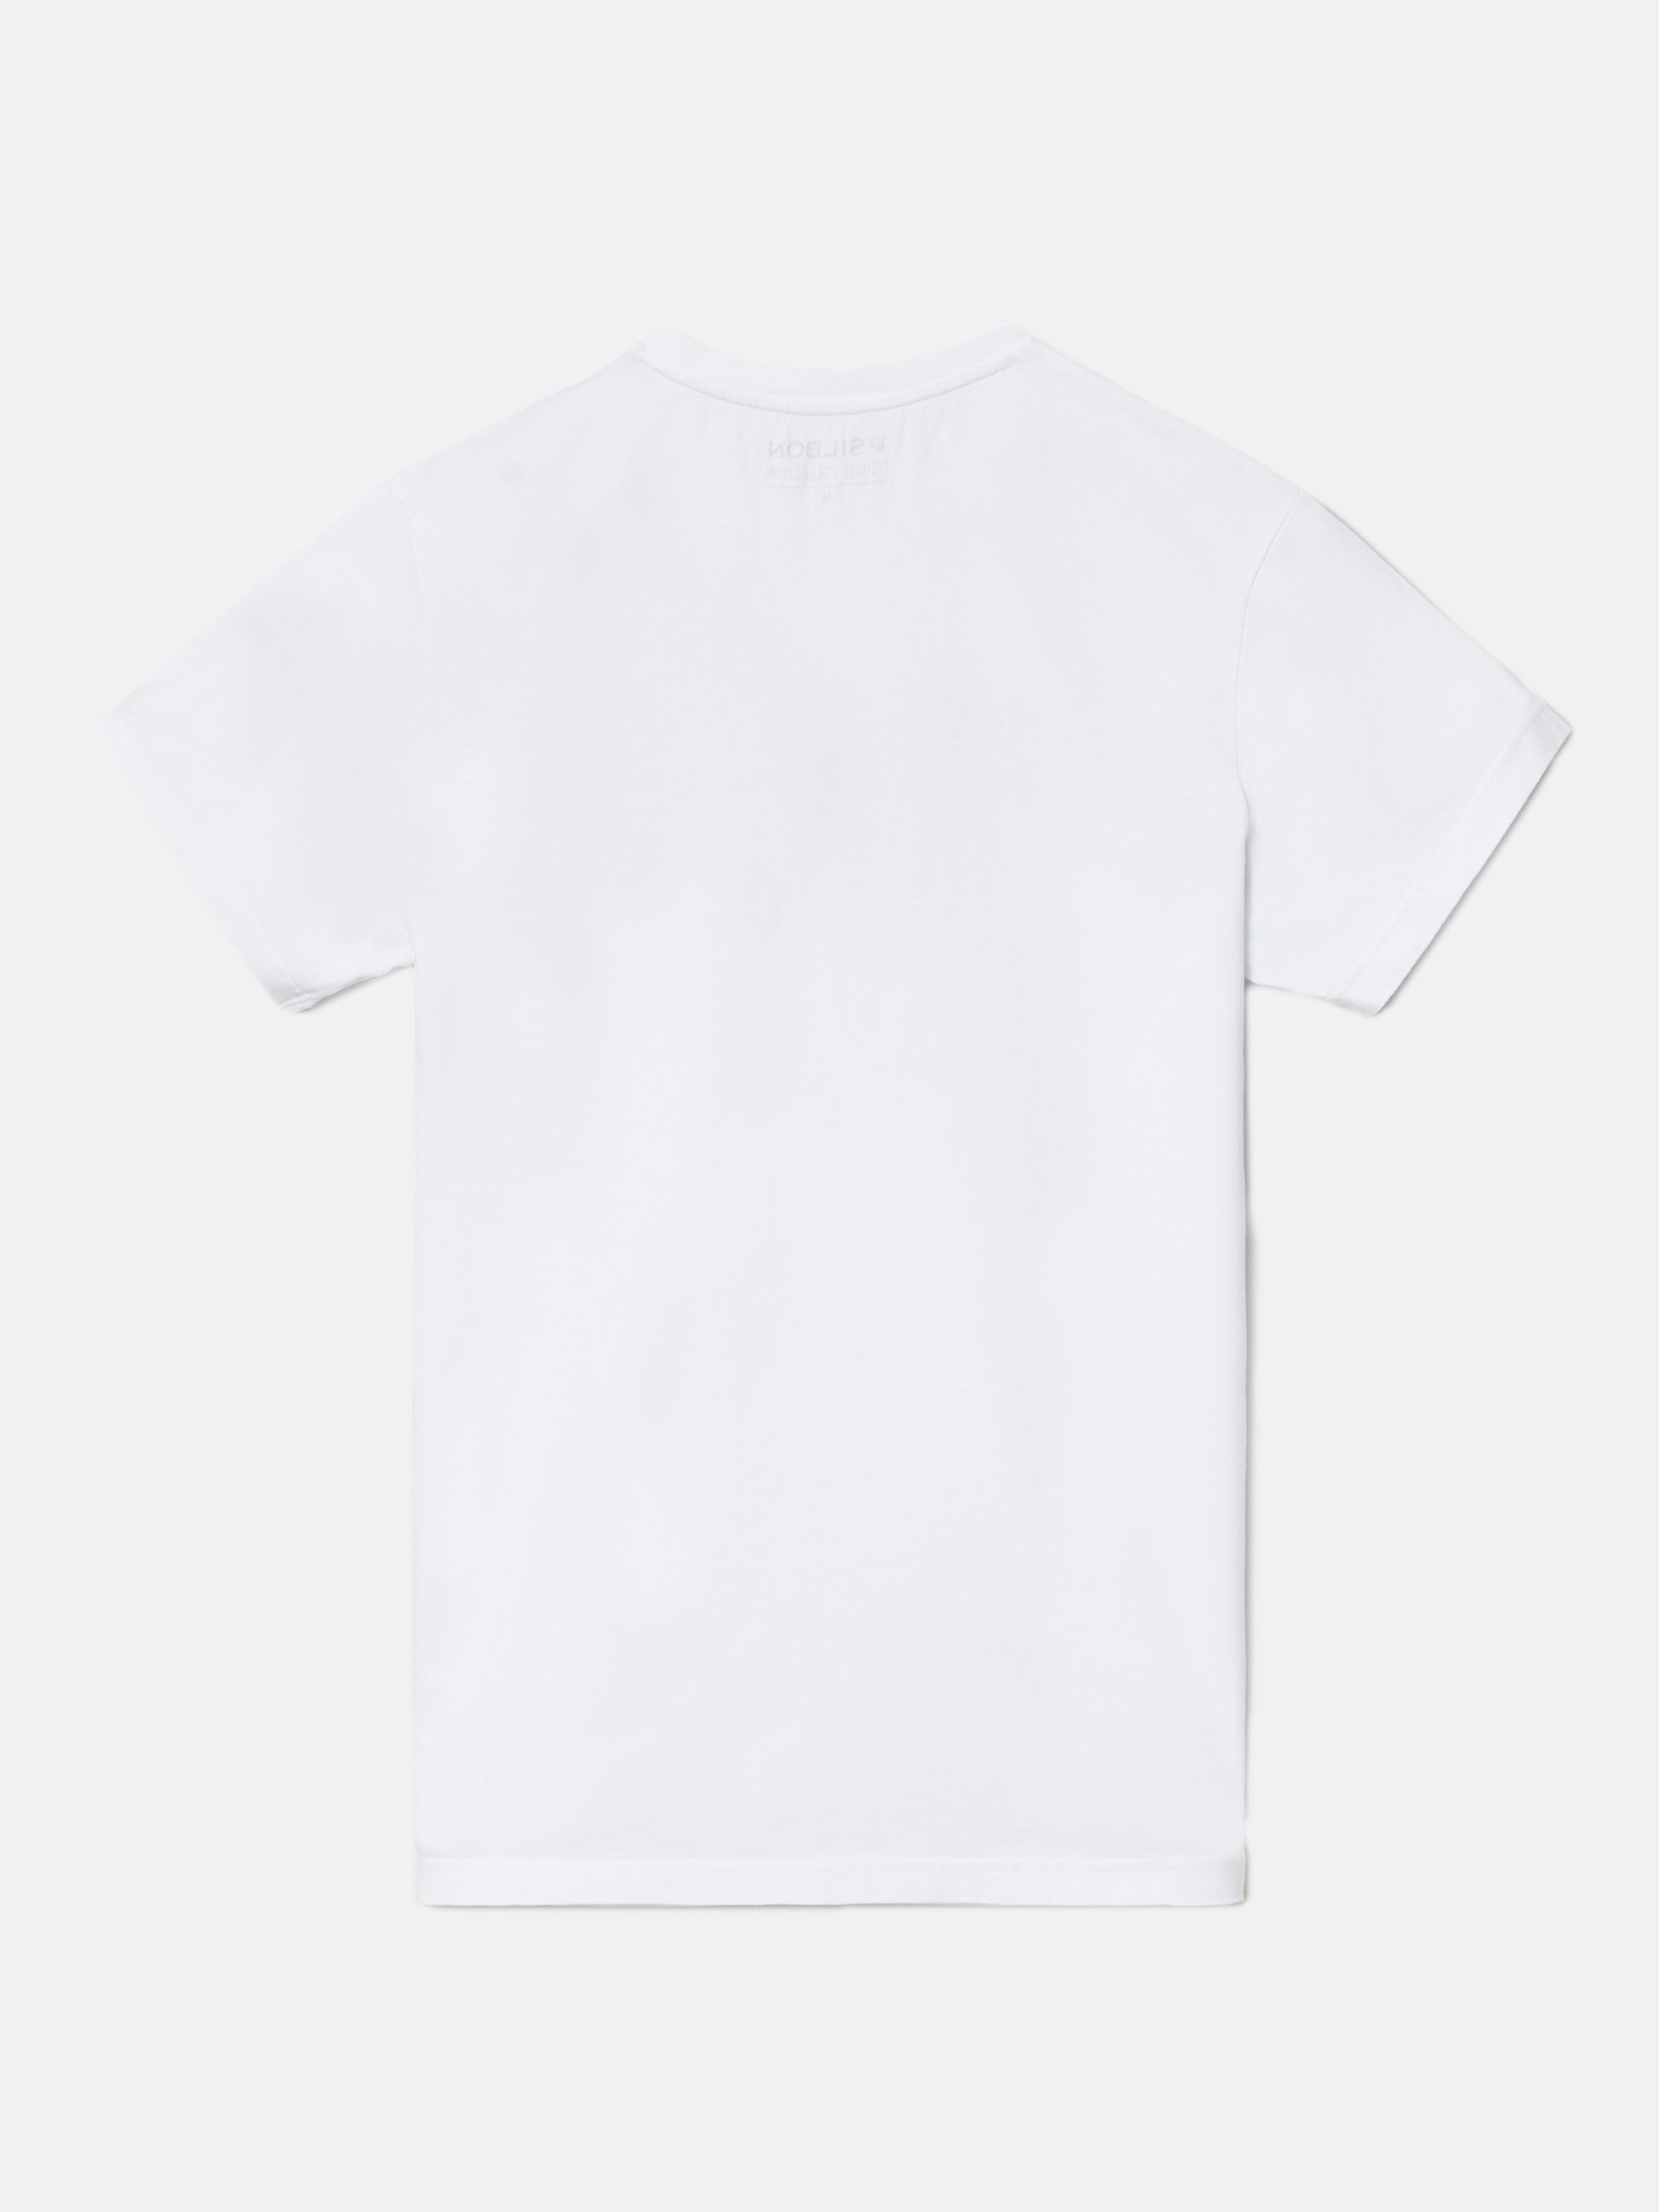 Silbon medium white racket t-shirt